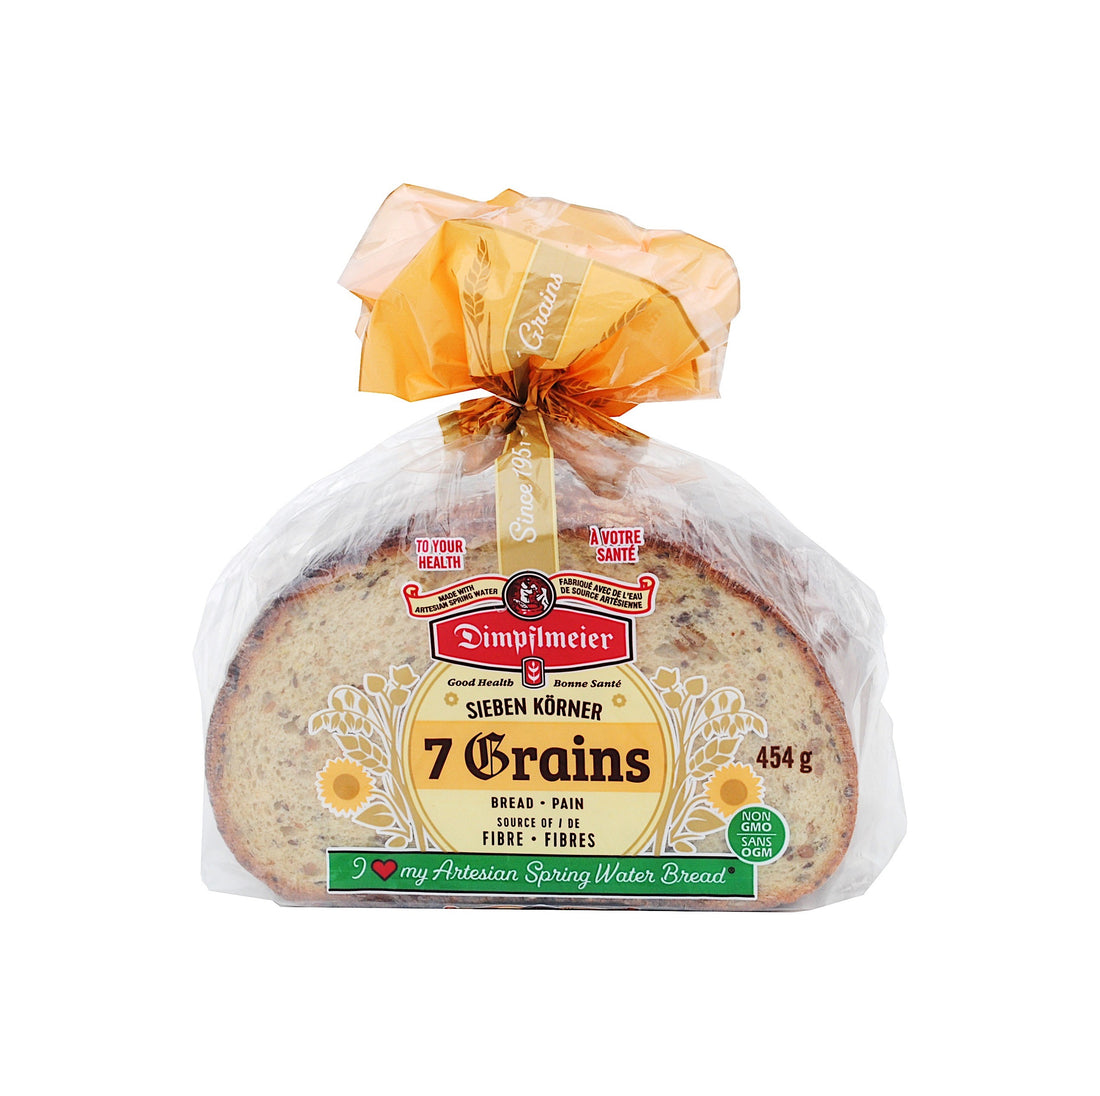 Buy Molenberg Toast Bread Balance Light Grains online at countdown